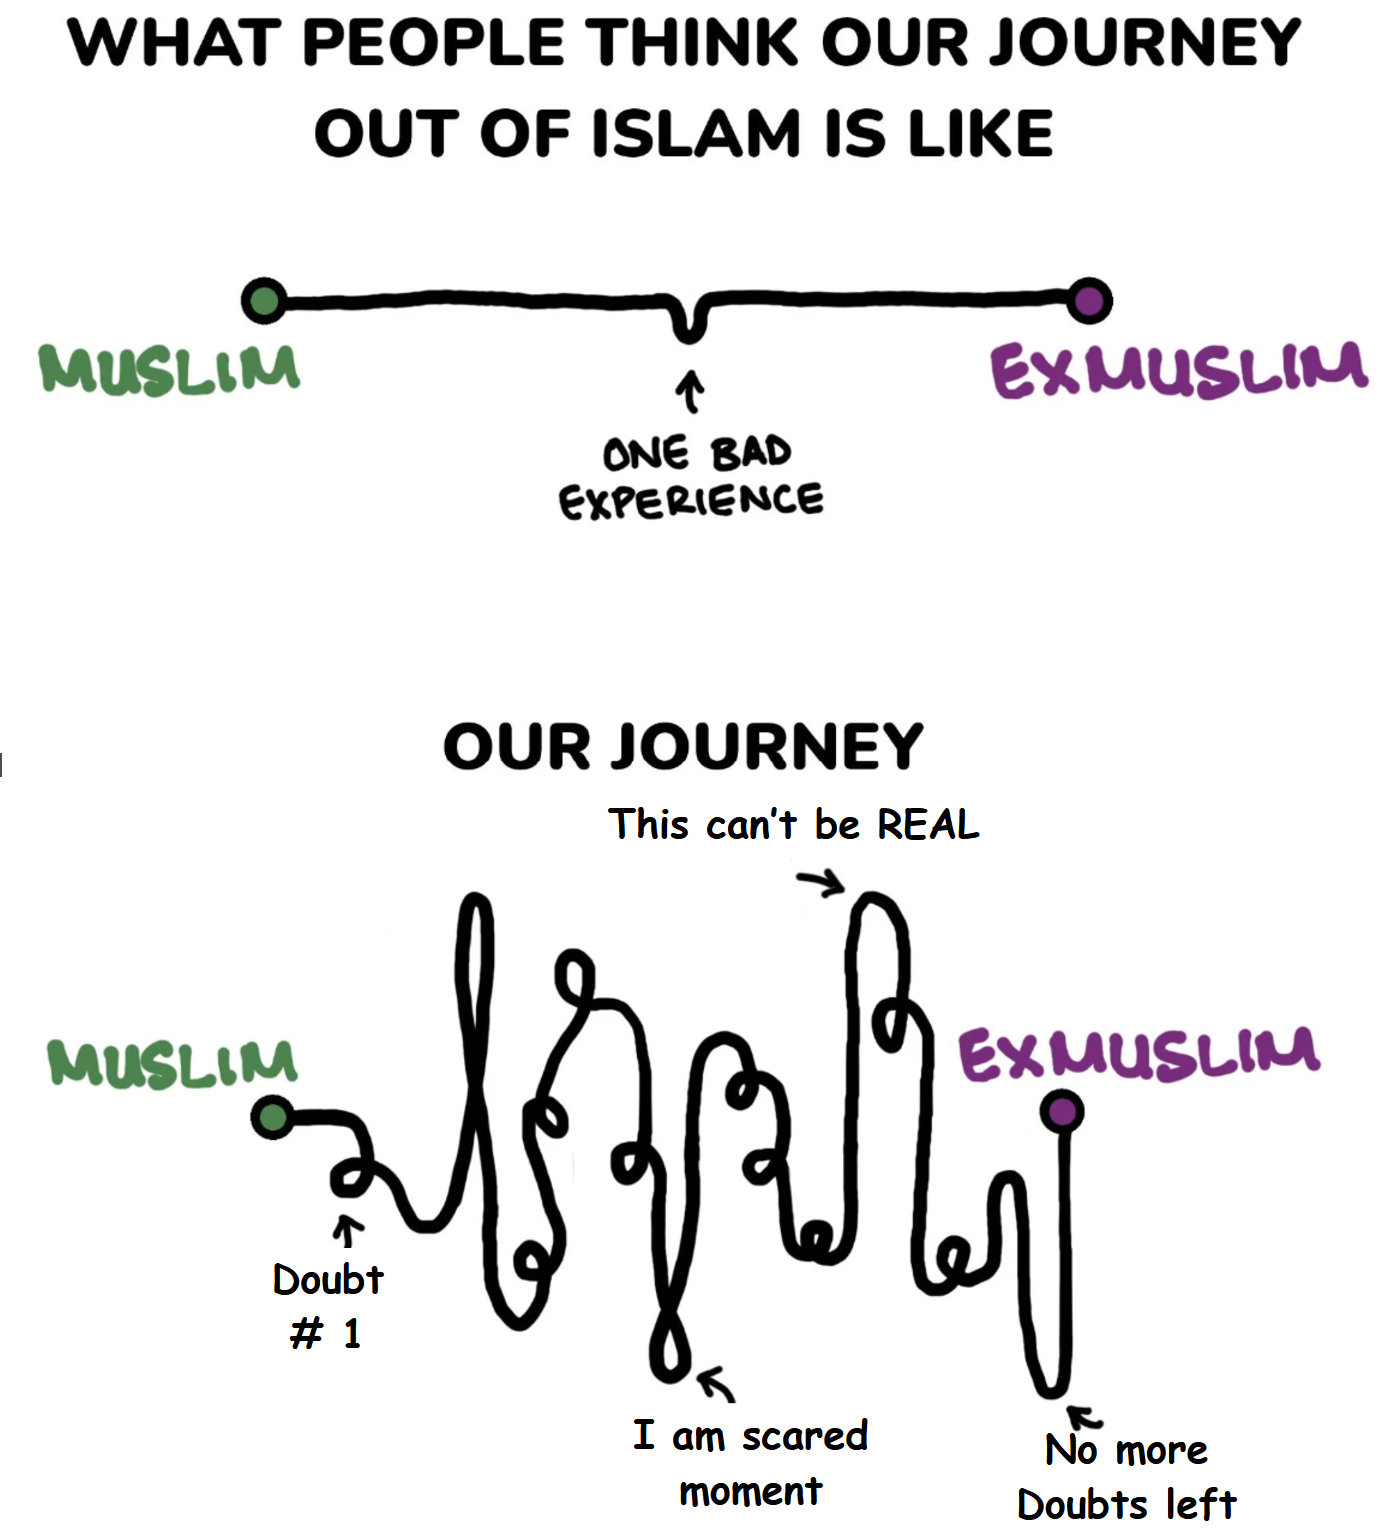 exMuslim joureny to leave Islam